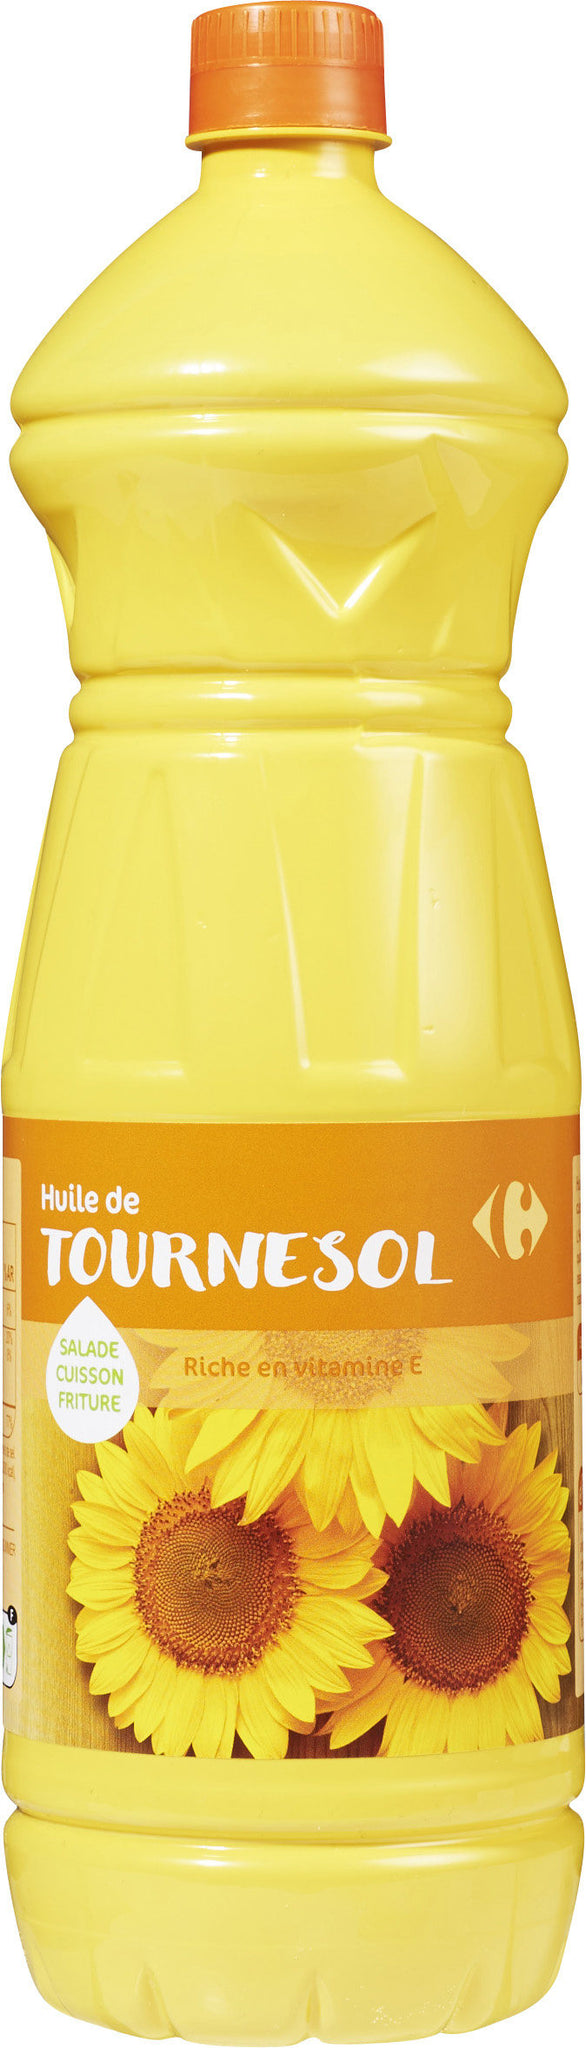 stm>Oil Tournesol, Carrefour, 1 ltr